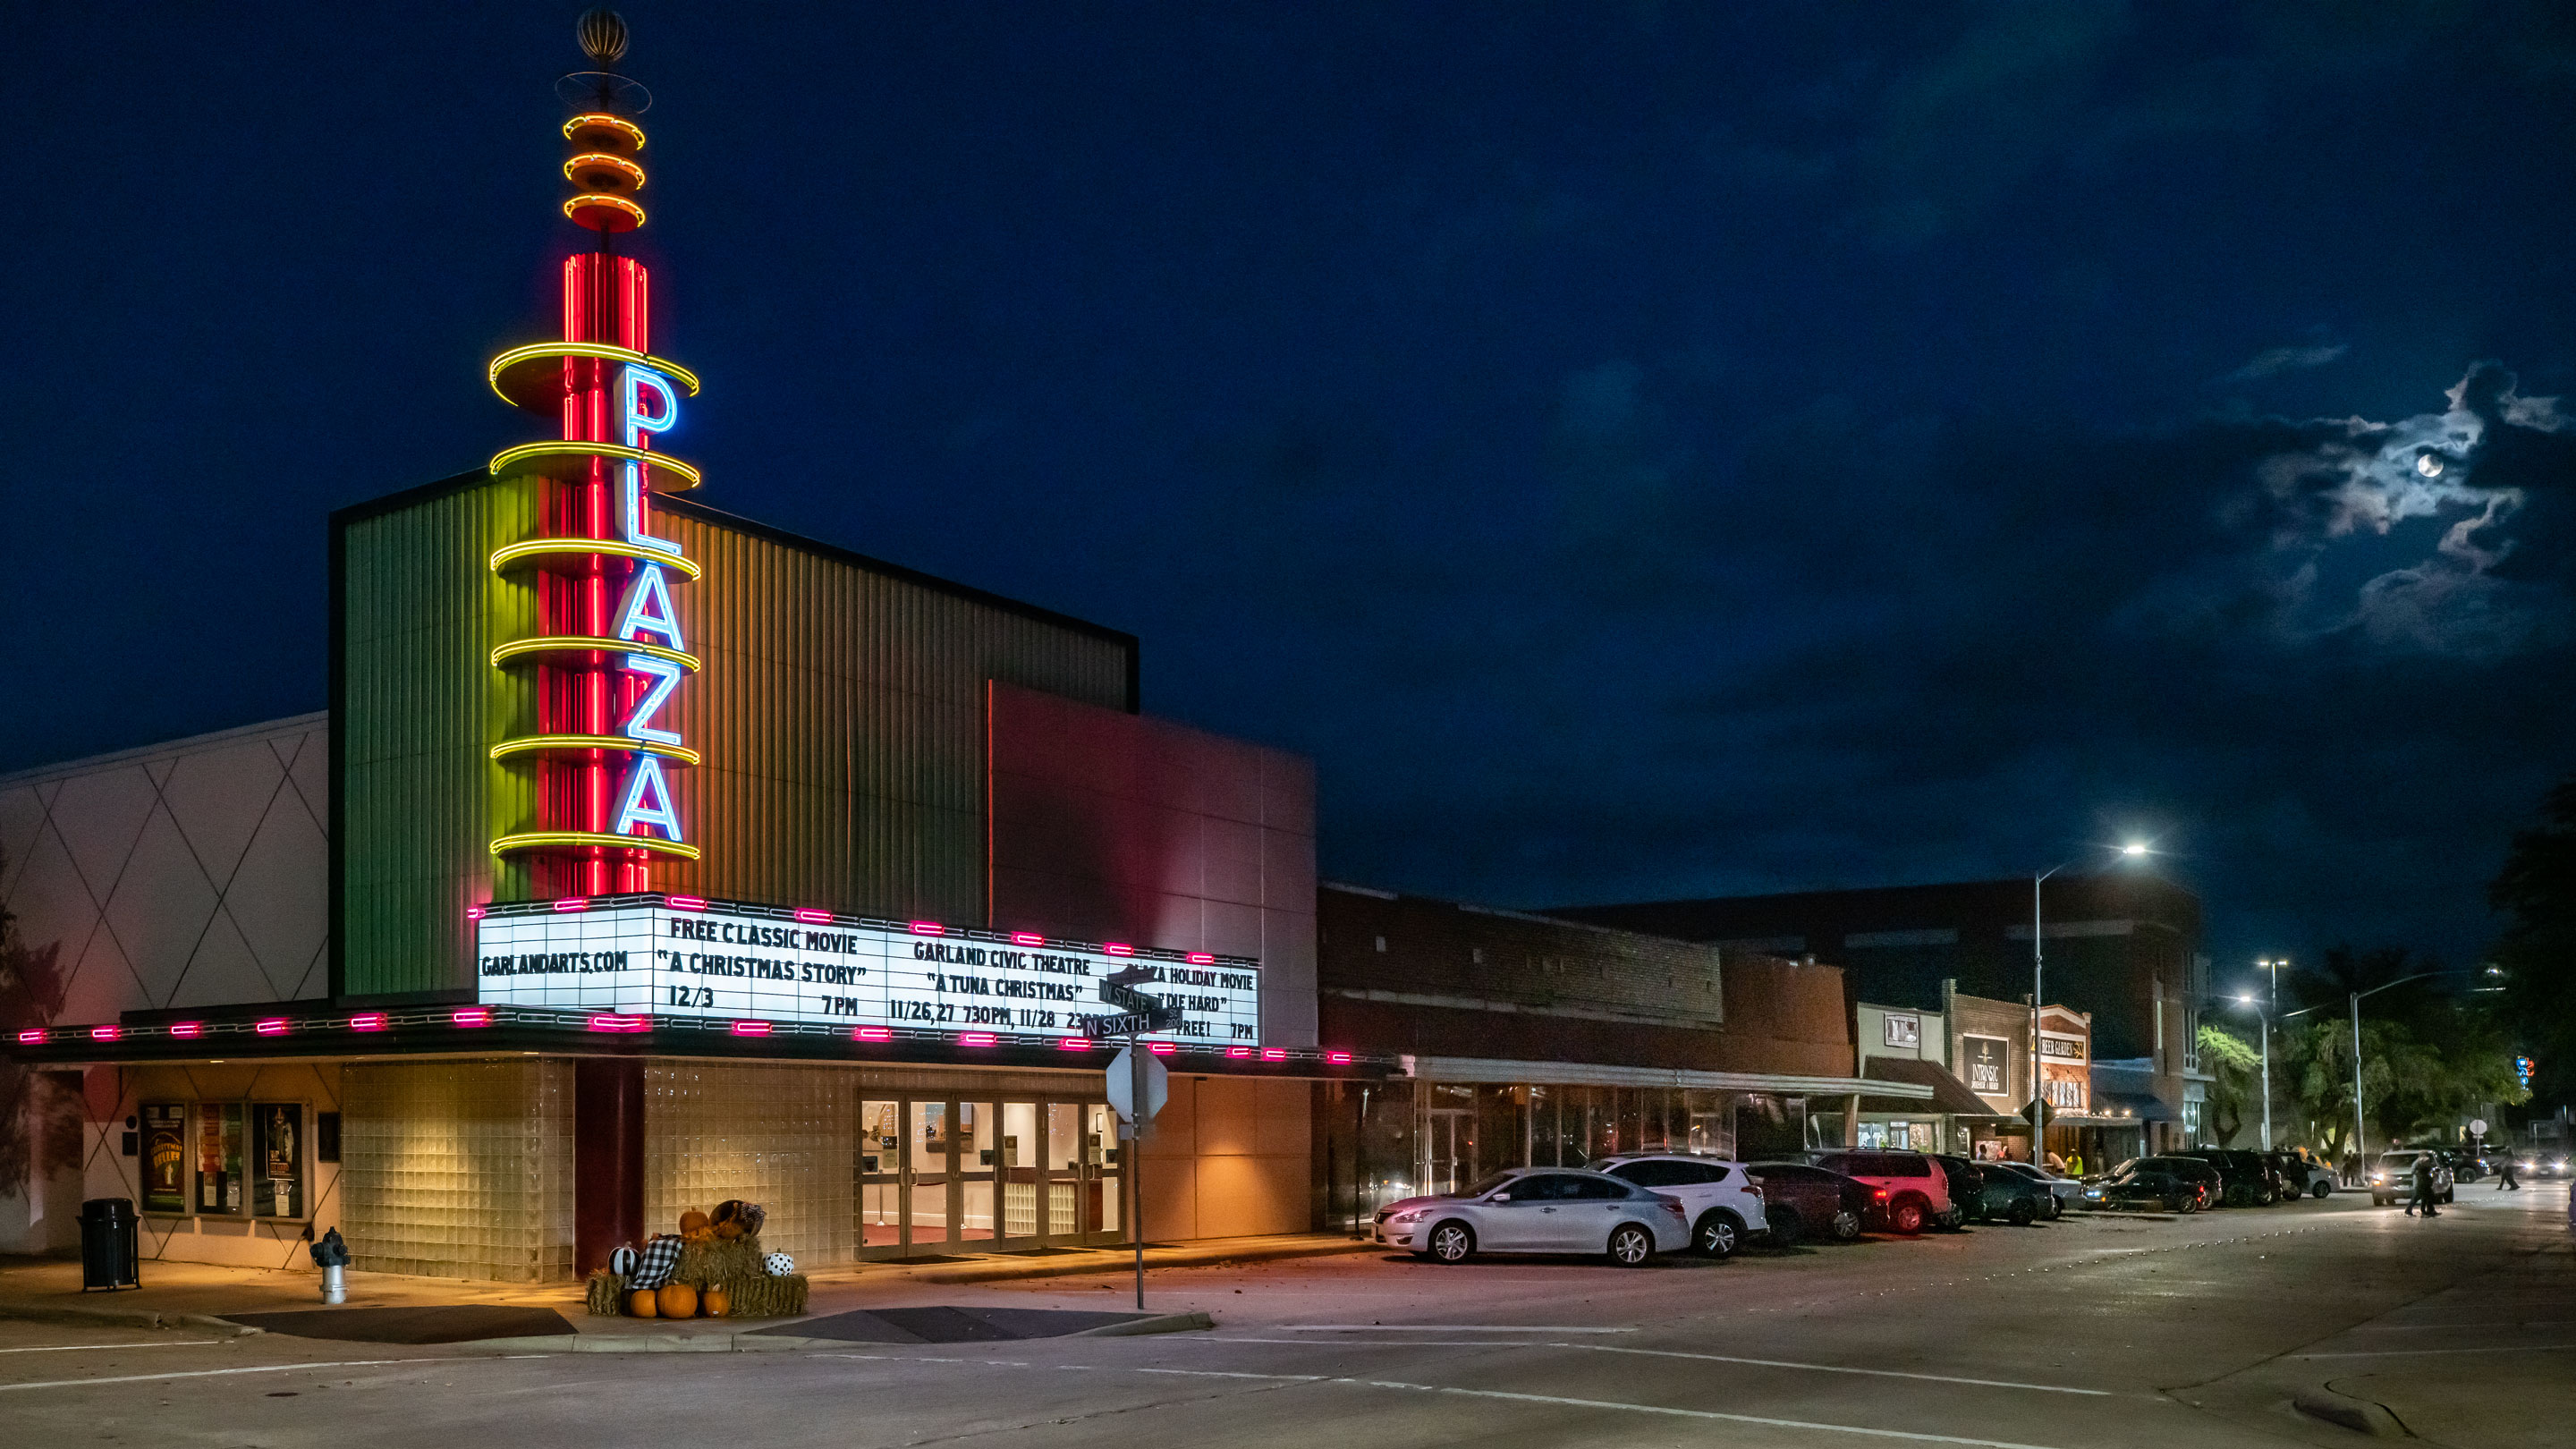 Garland Texas' Plaza Theater